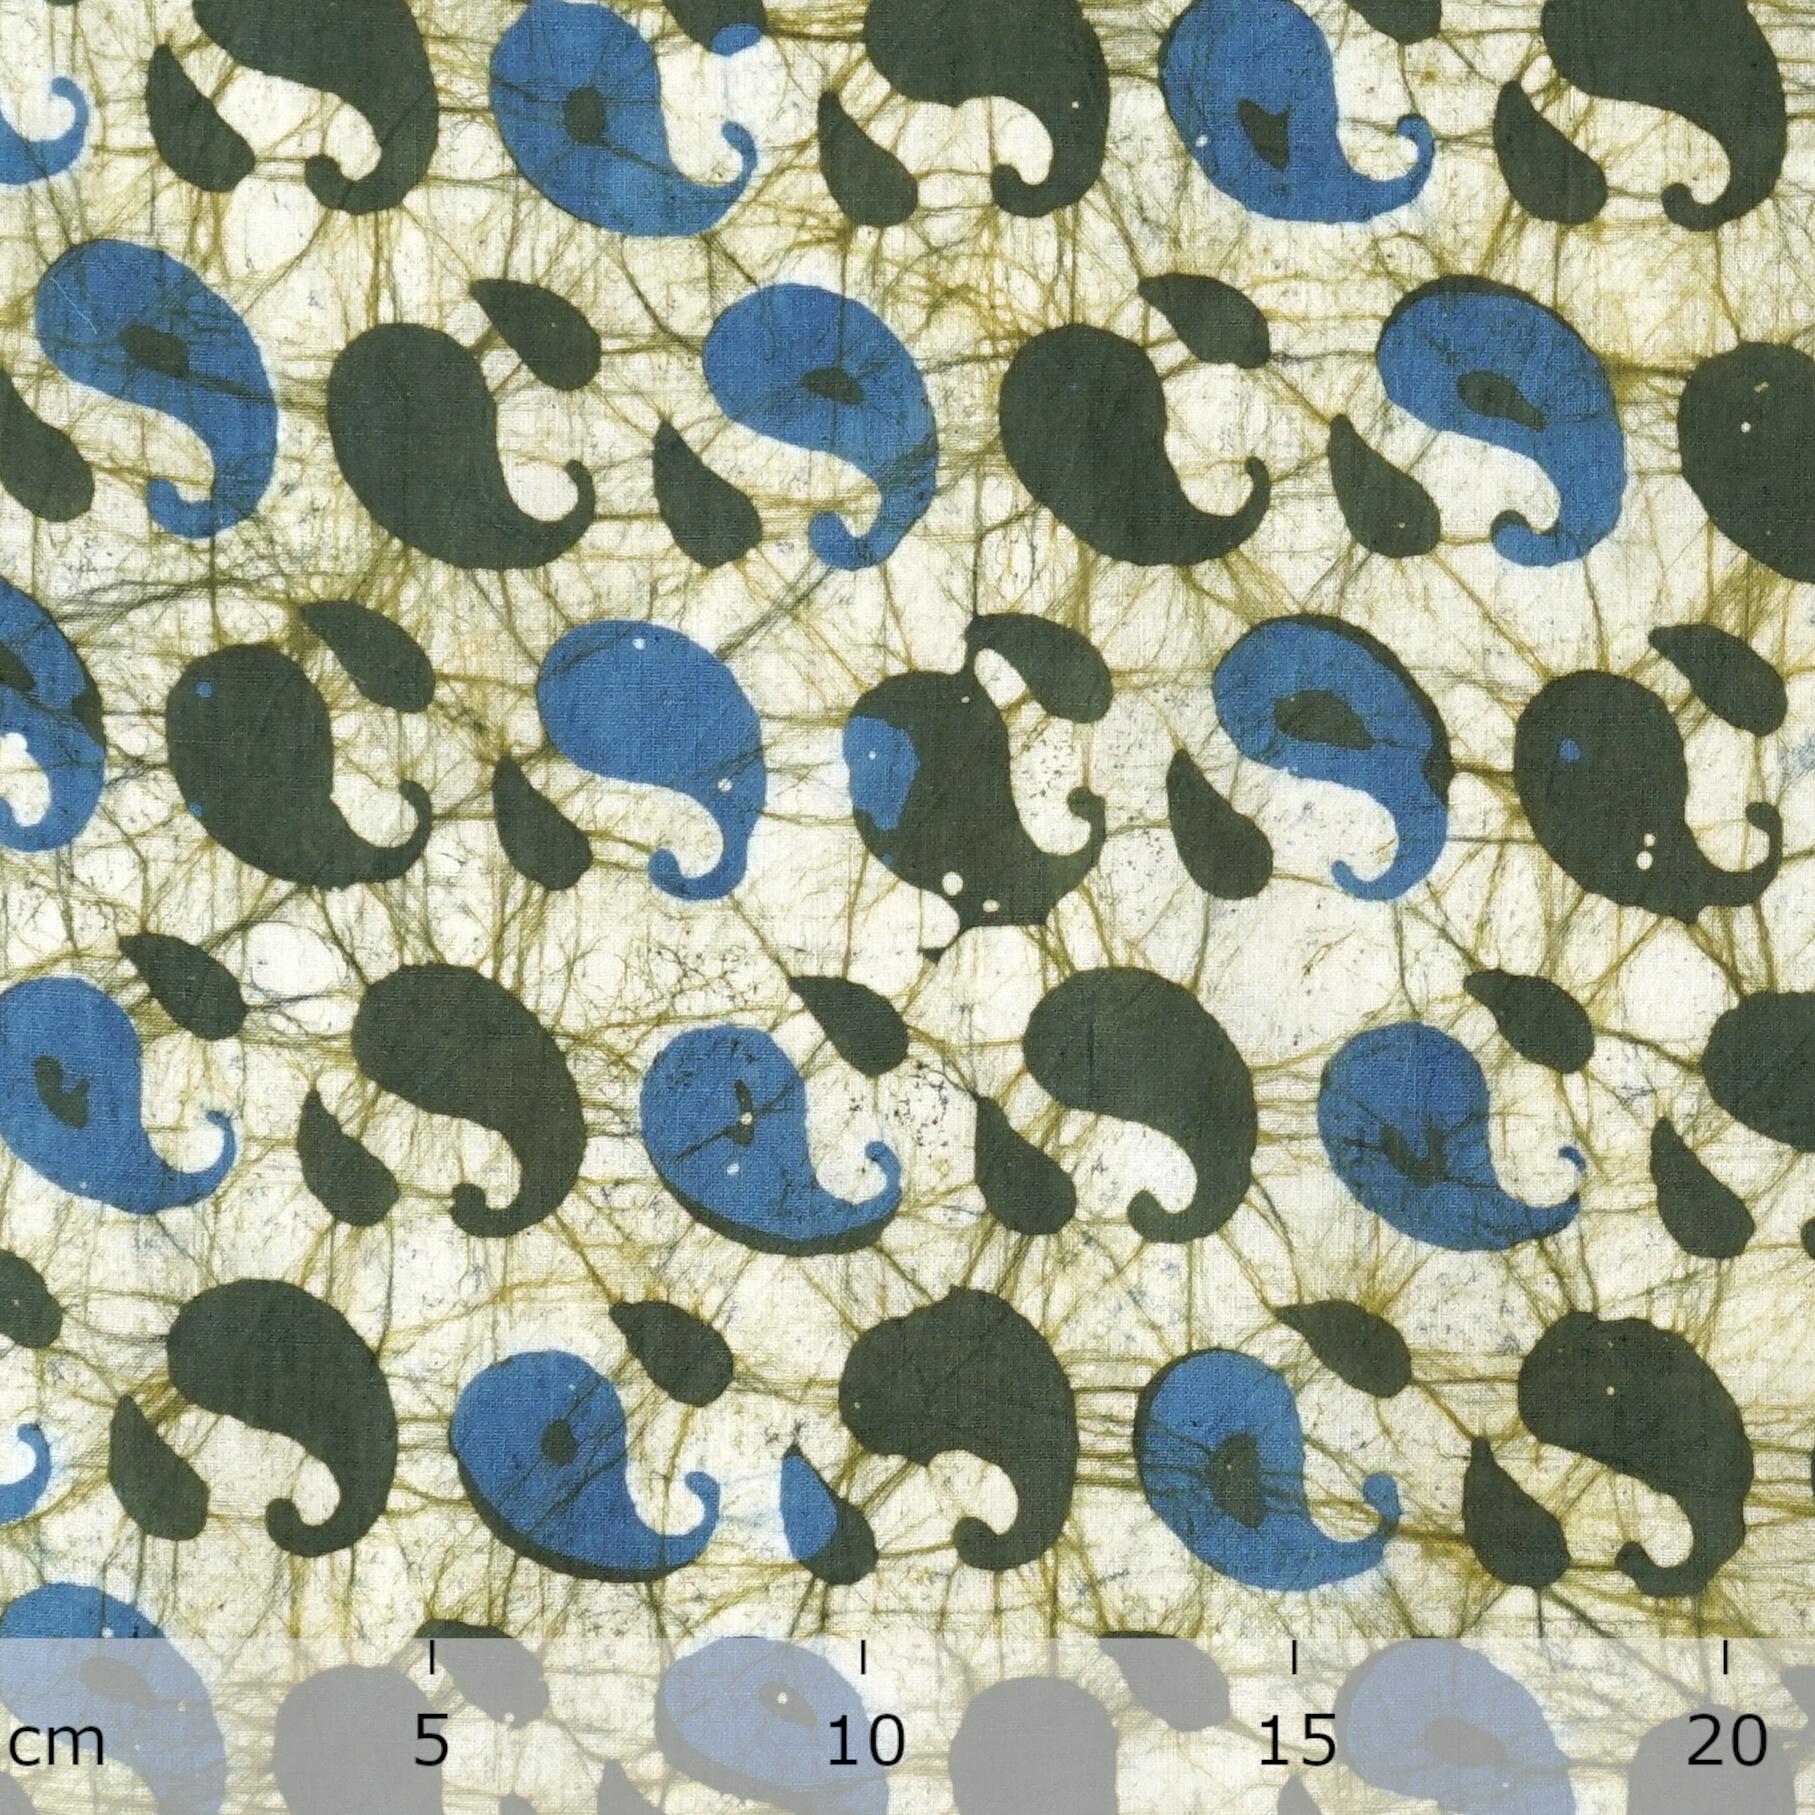 Block-Printed Batik Fabric - Cotton Cloth - Reactive Dyes - Paisley Design - Ruler